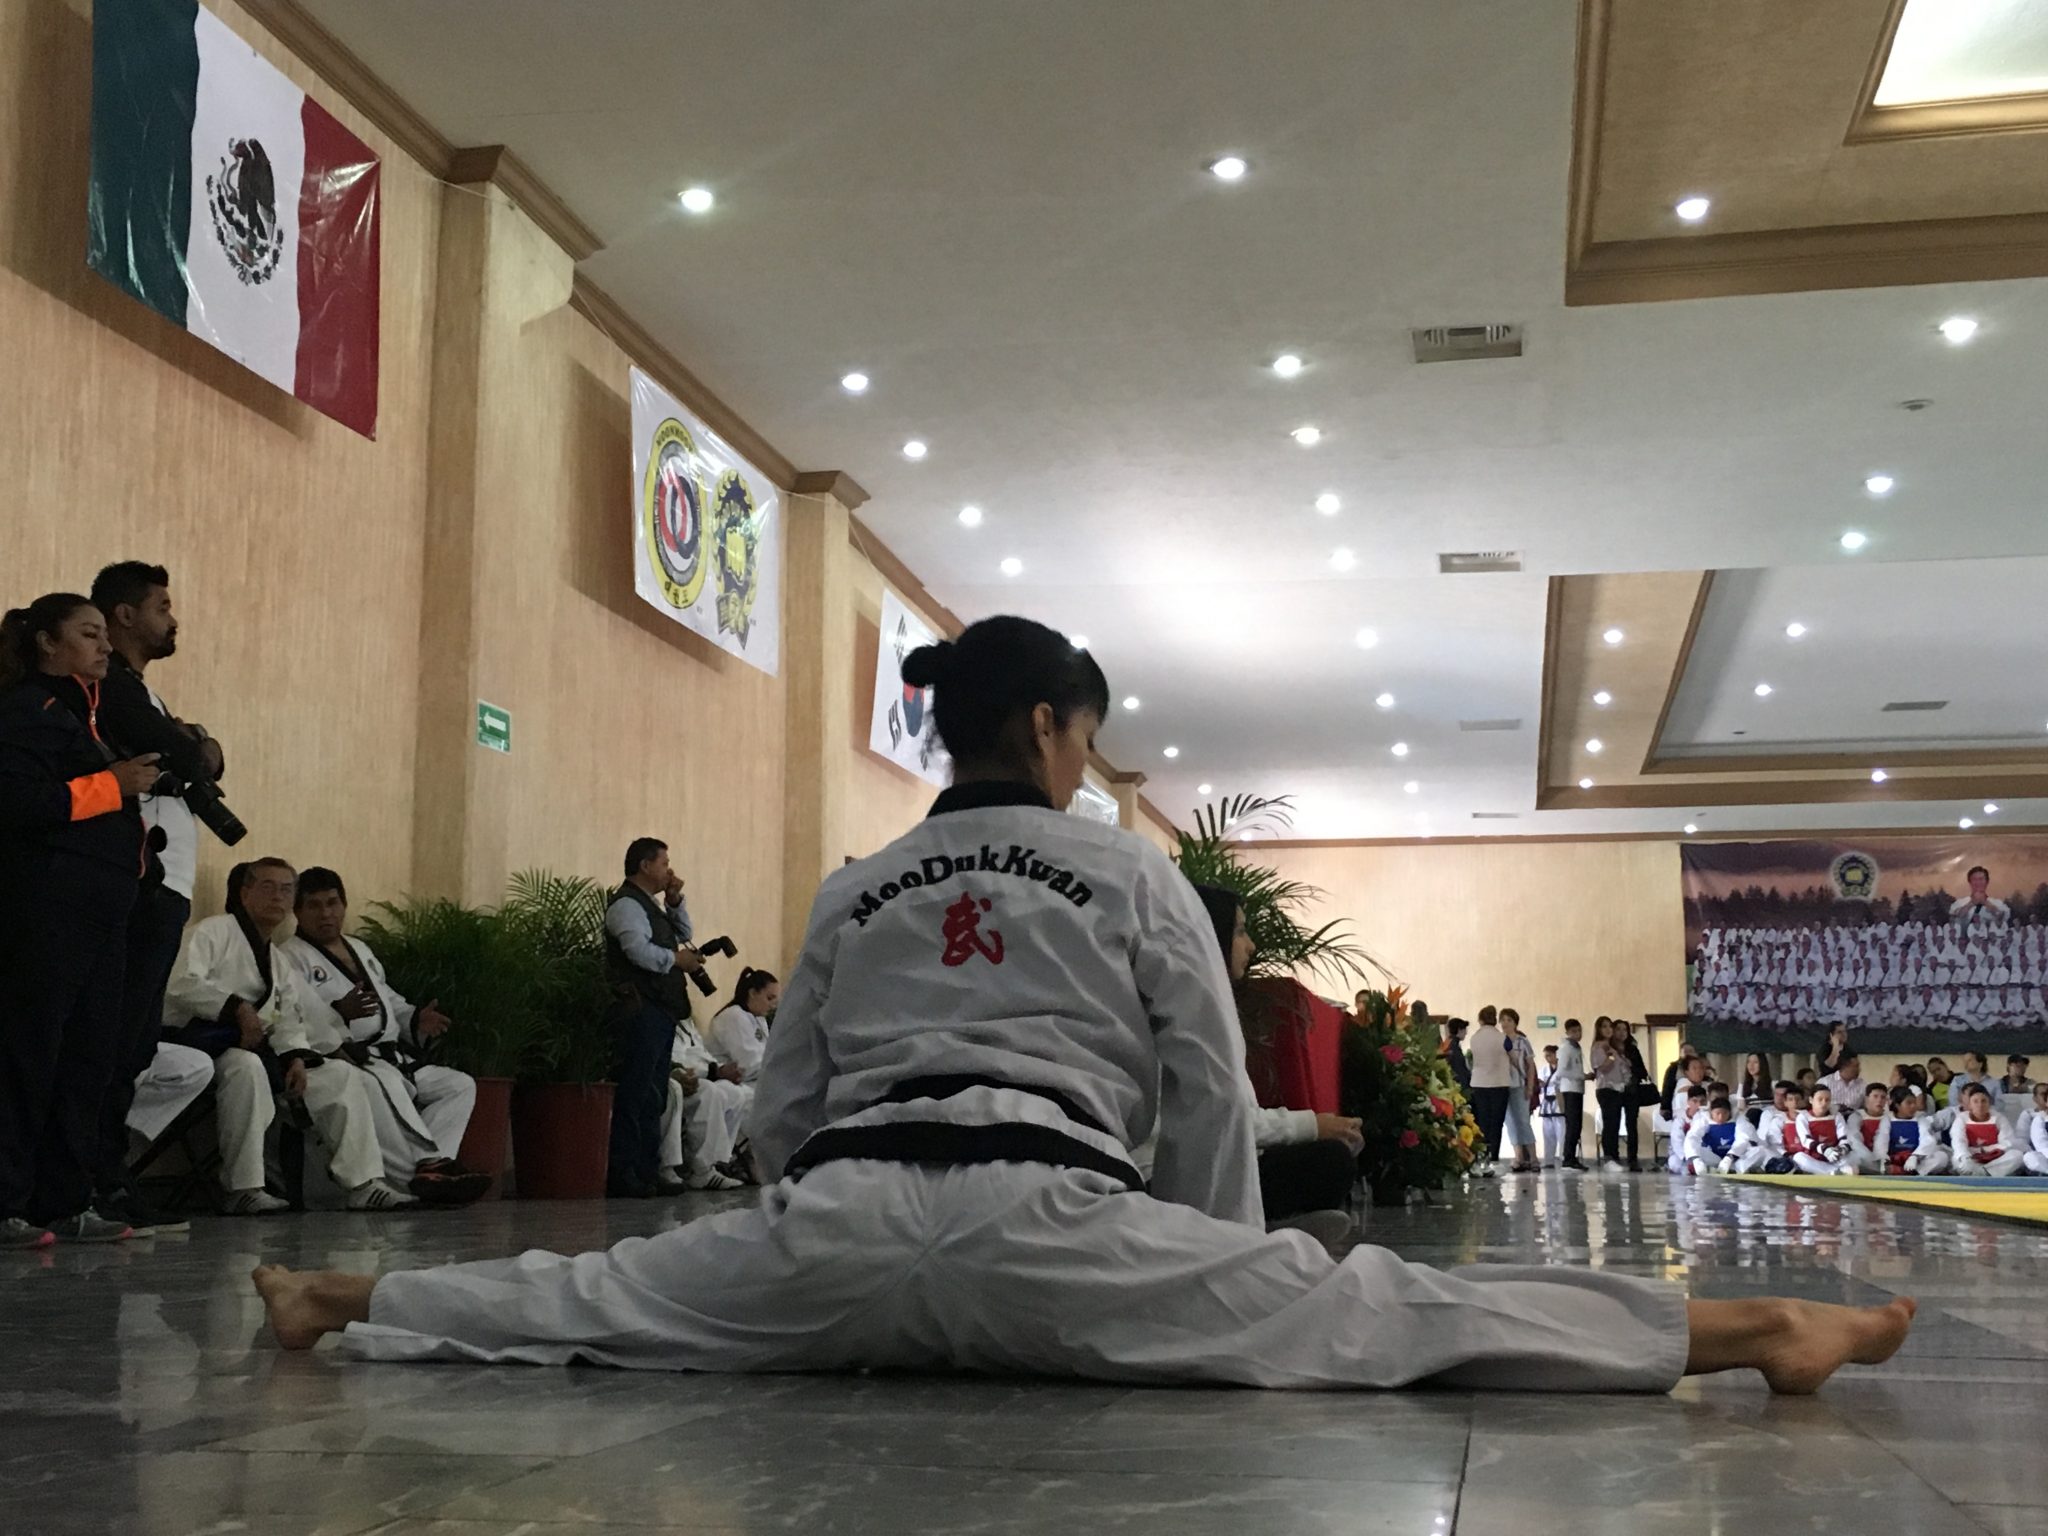 Proyecto Taekwondo V2.0 squat antes de empezar el examen de cintas negras